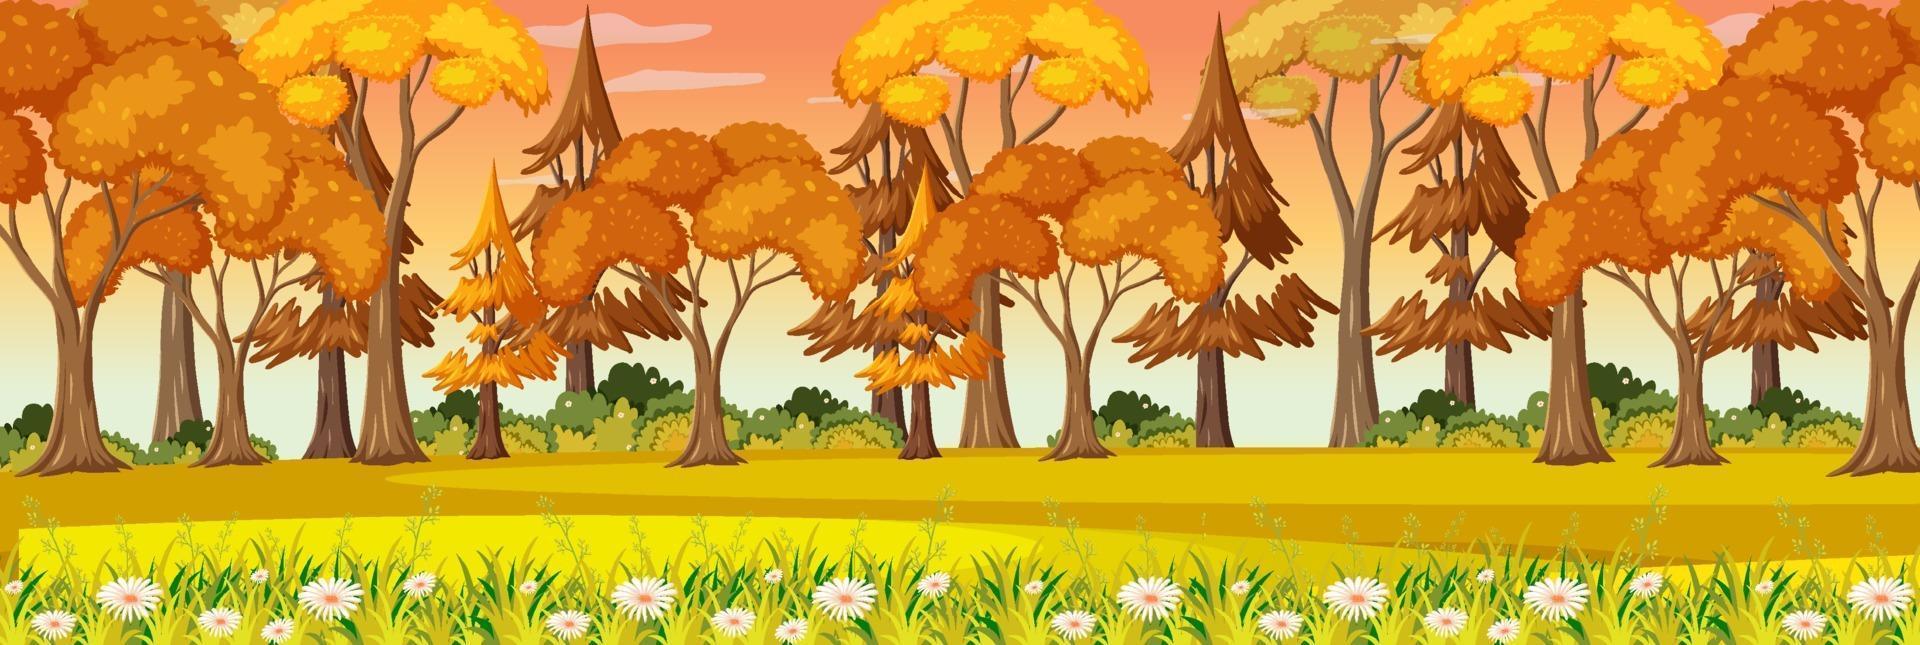 Autumn park horizontal landscape scene vector